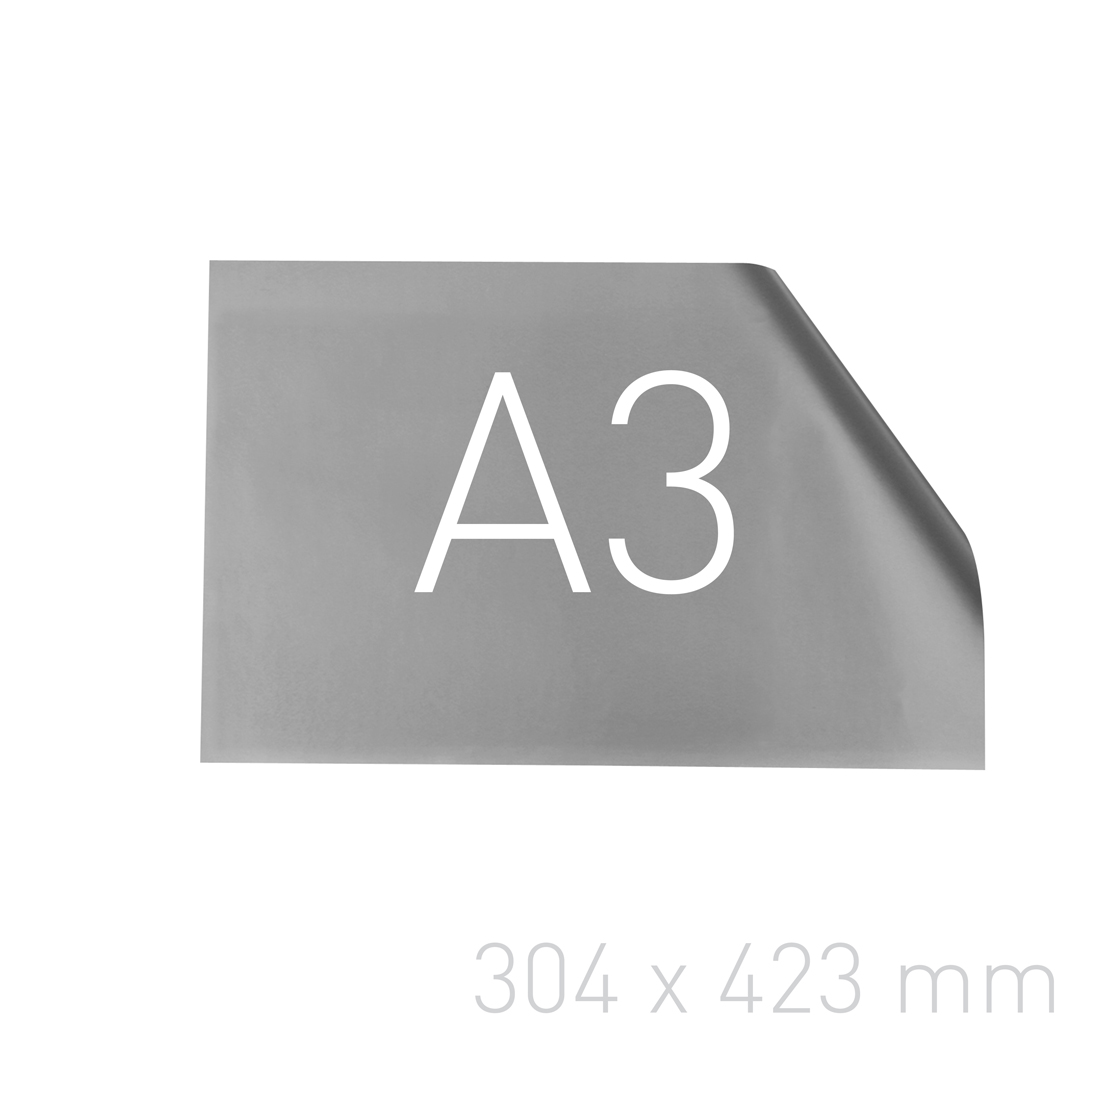 Papier posrebrzany - O.pouchCOVER PAPER 304 x 423 mm (A3 orientacja pozioma) - srebrny - 25 sztuk